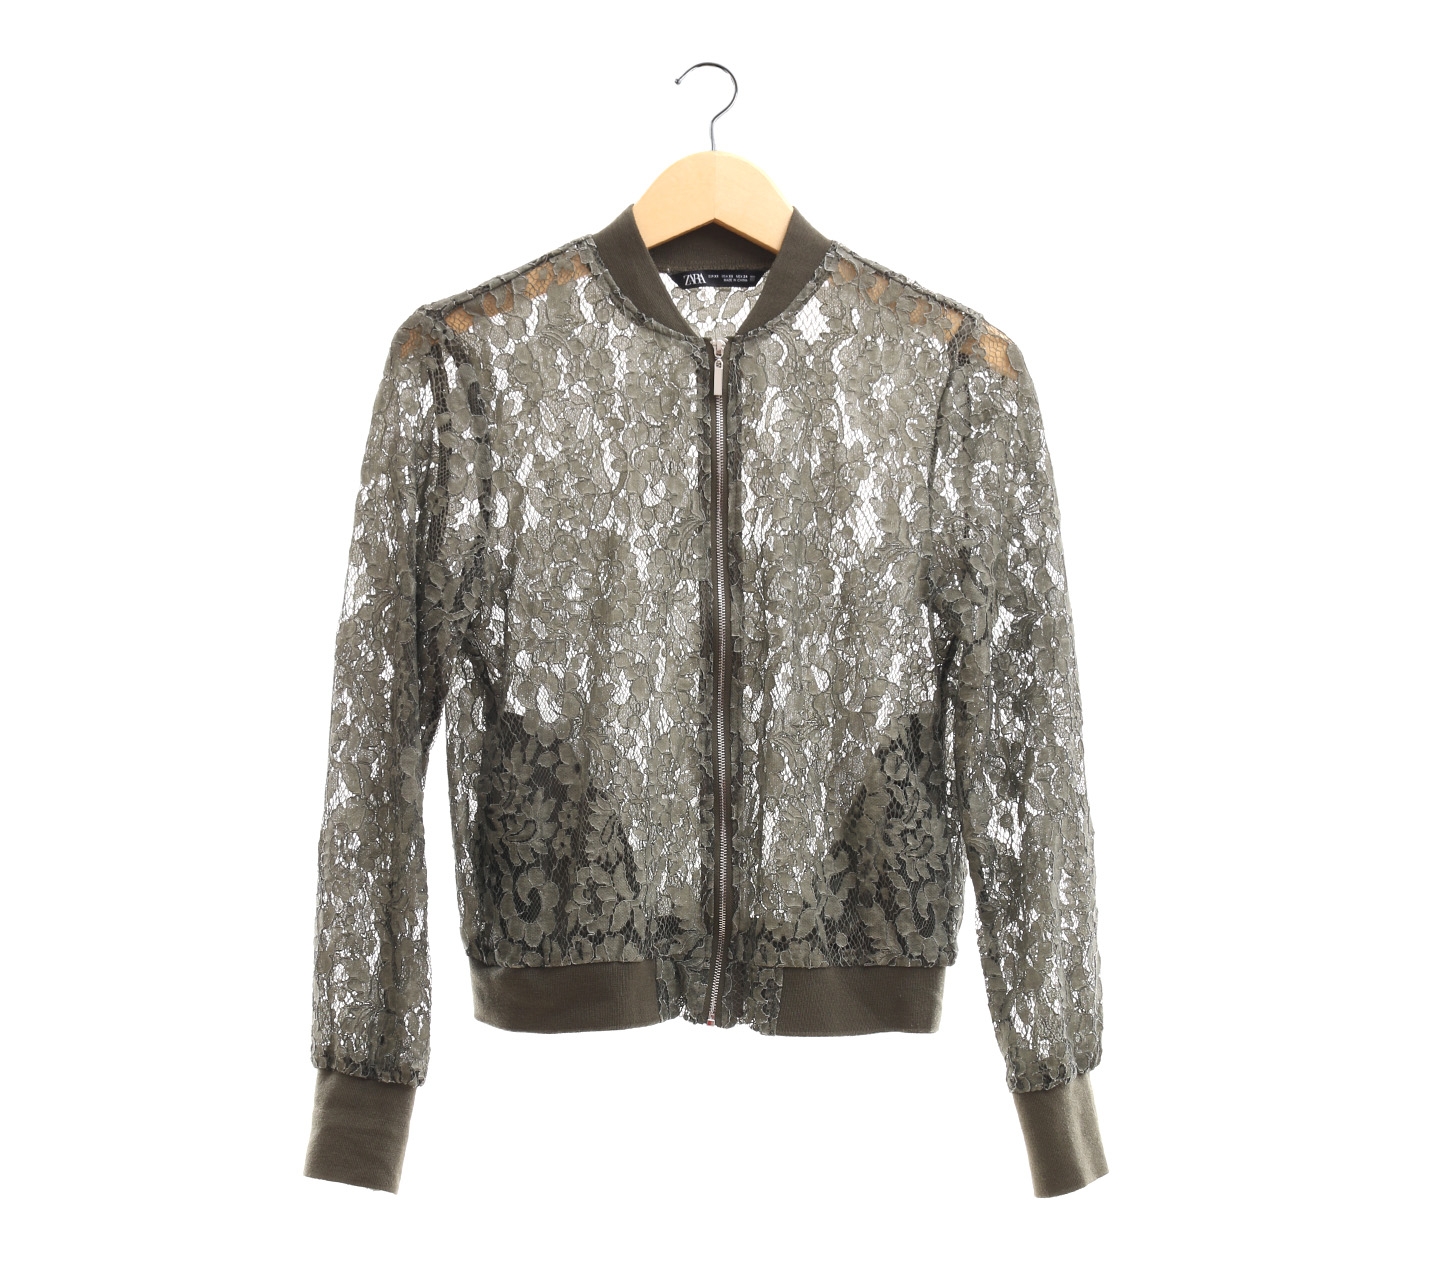 Zara Olive Lace Jacket